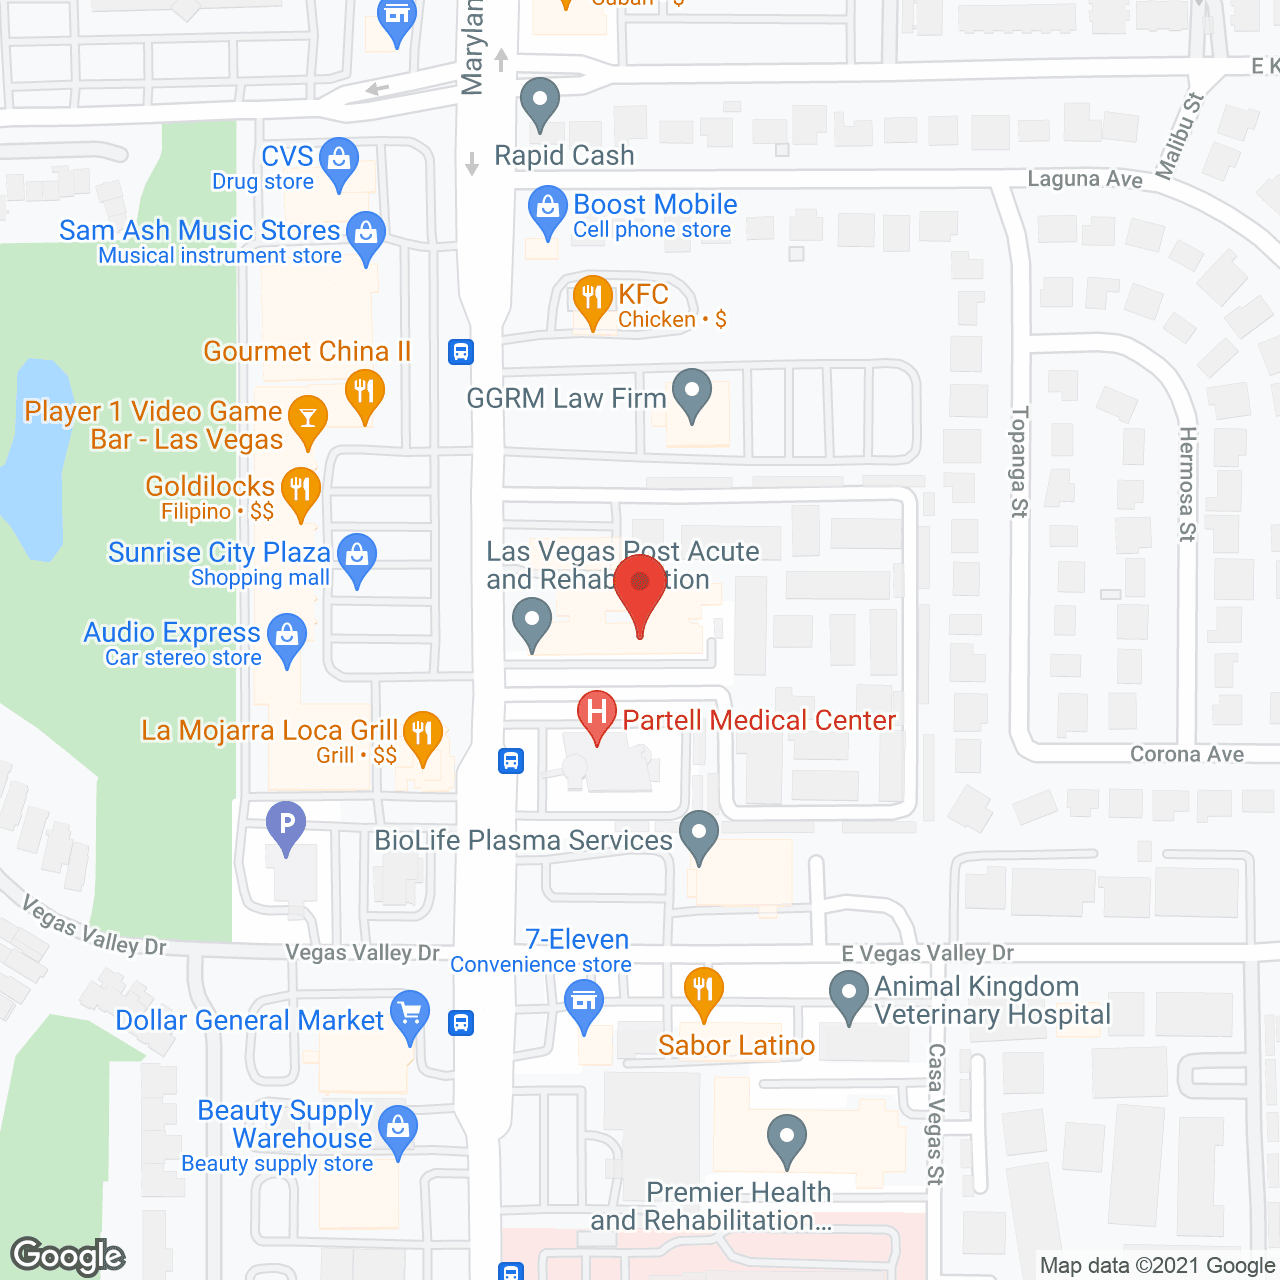 Las Vegas Post Acute & Rehab in google map